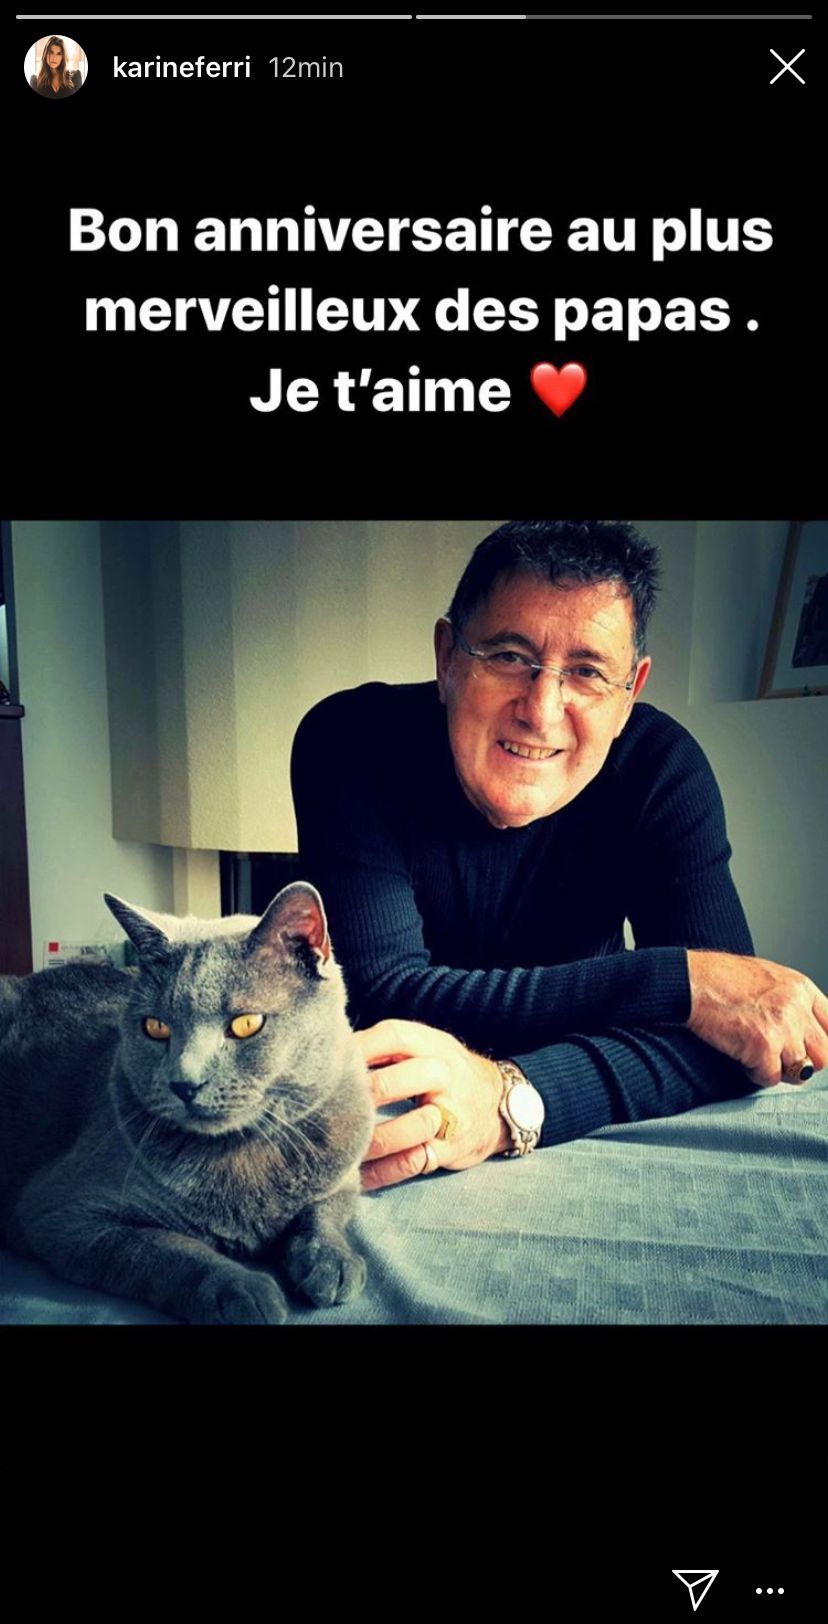 Karine Ferri souhaite un bon anniversaire à son père. | Photo : Story Instagram / karineferri